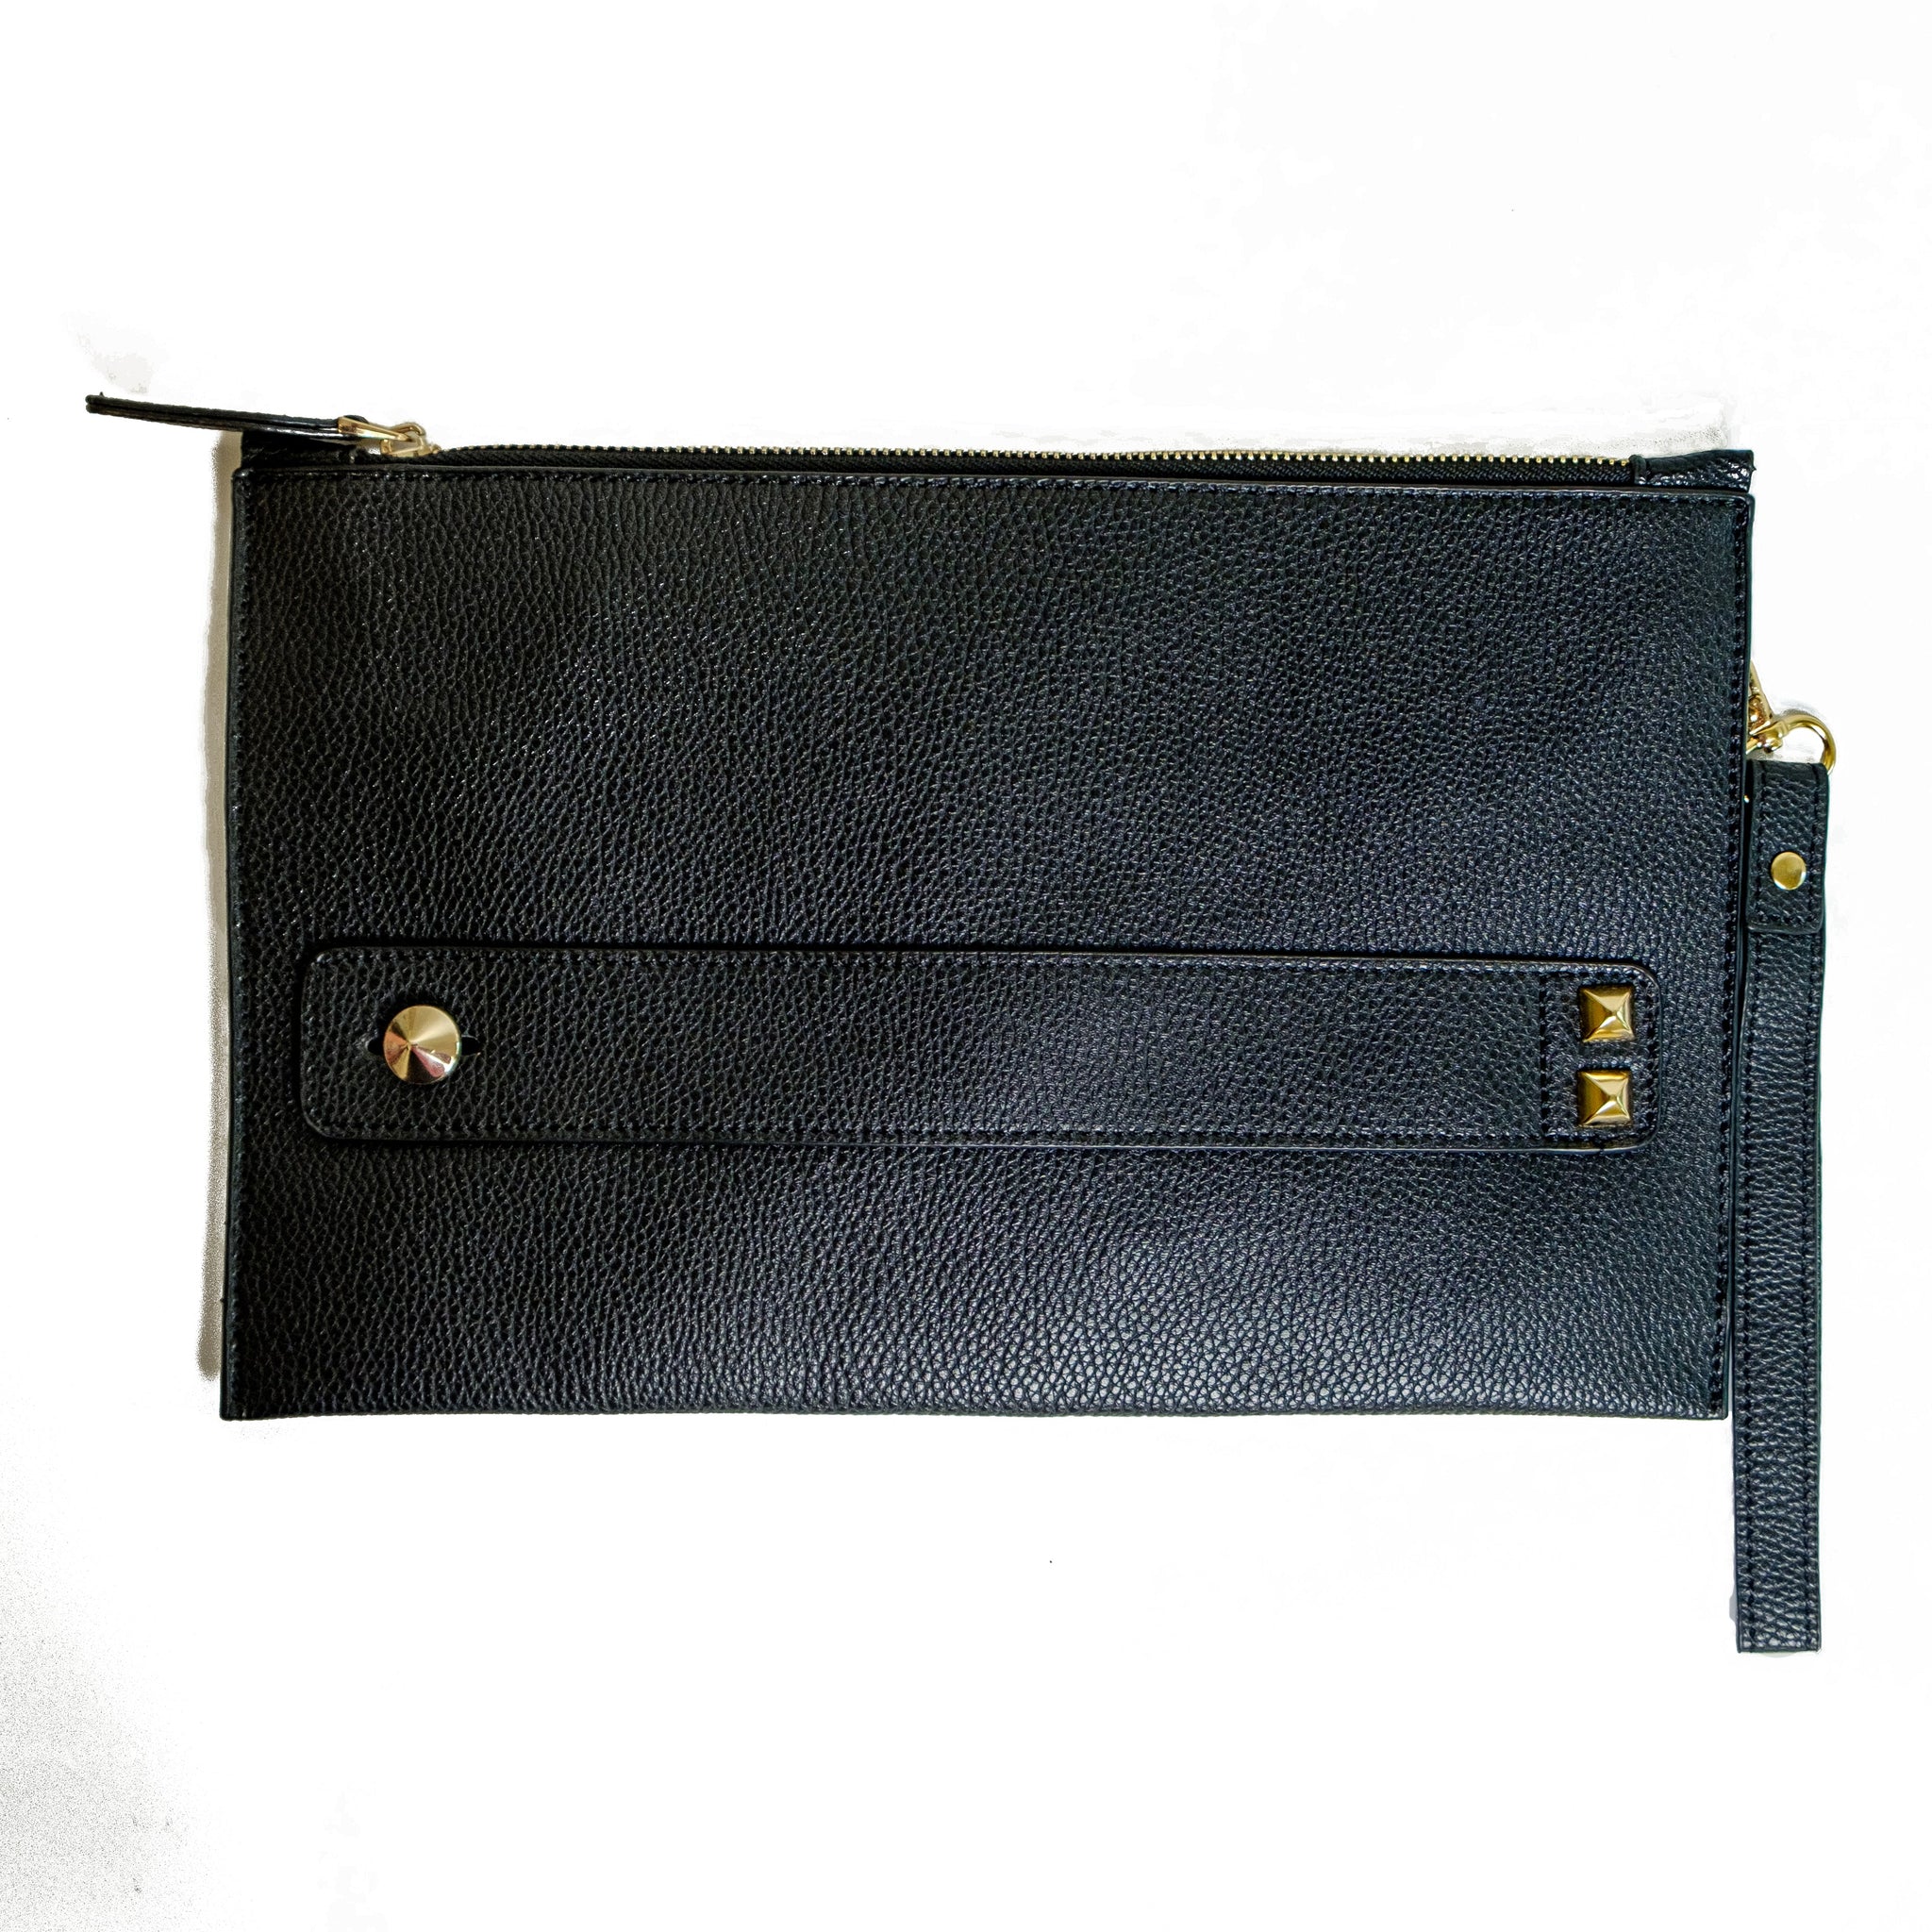 "Chokore Vegan Leather Envelope Clutch (Black)  "